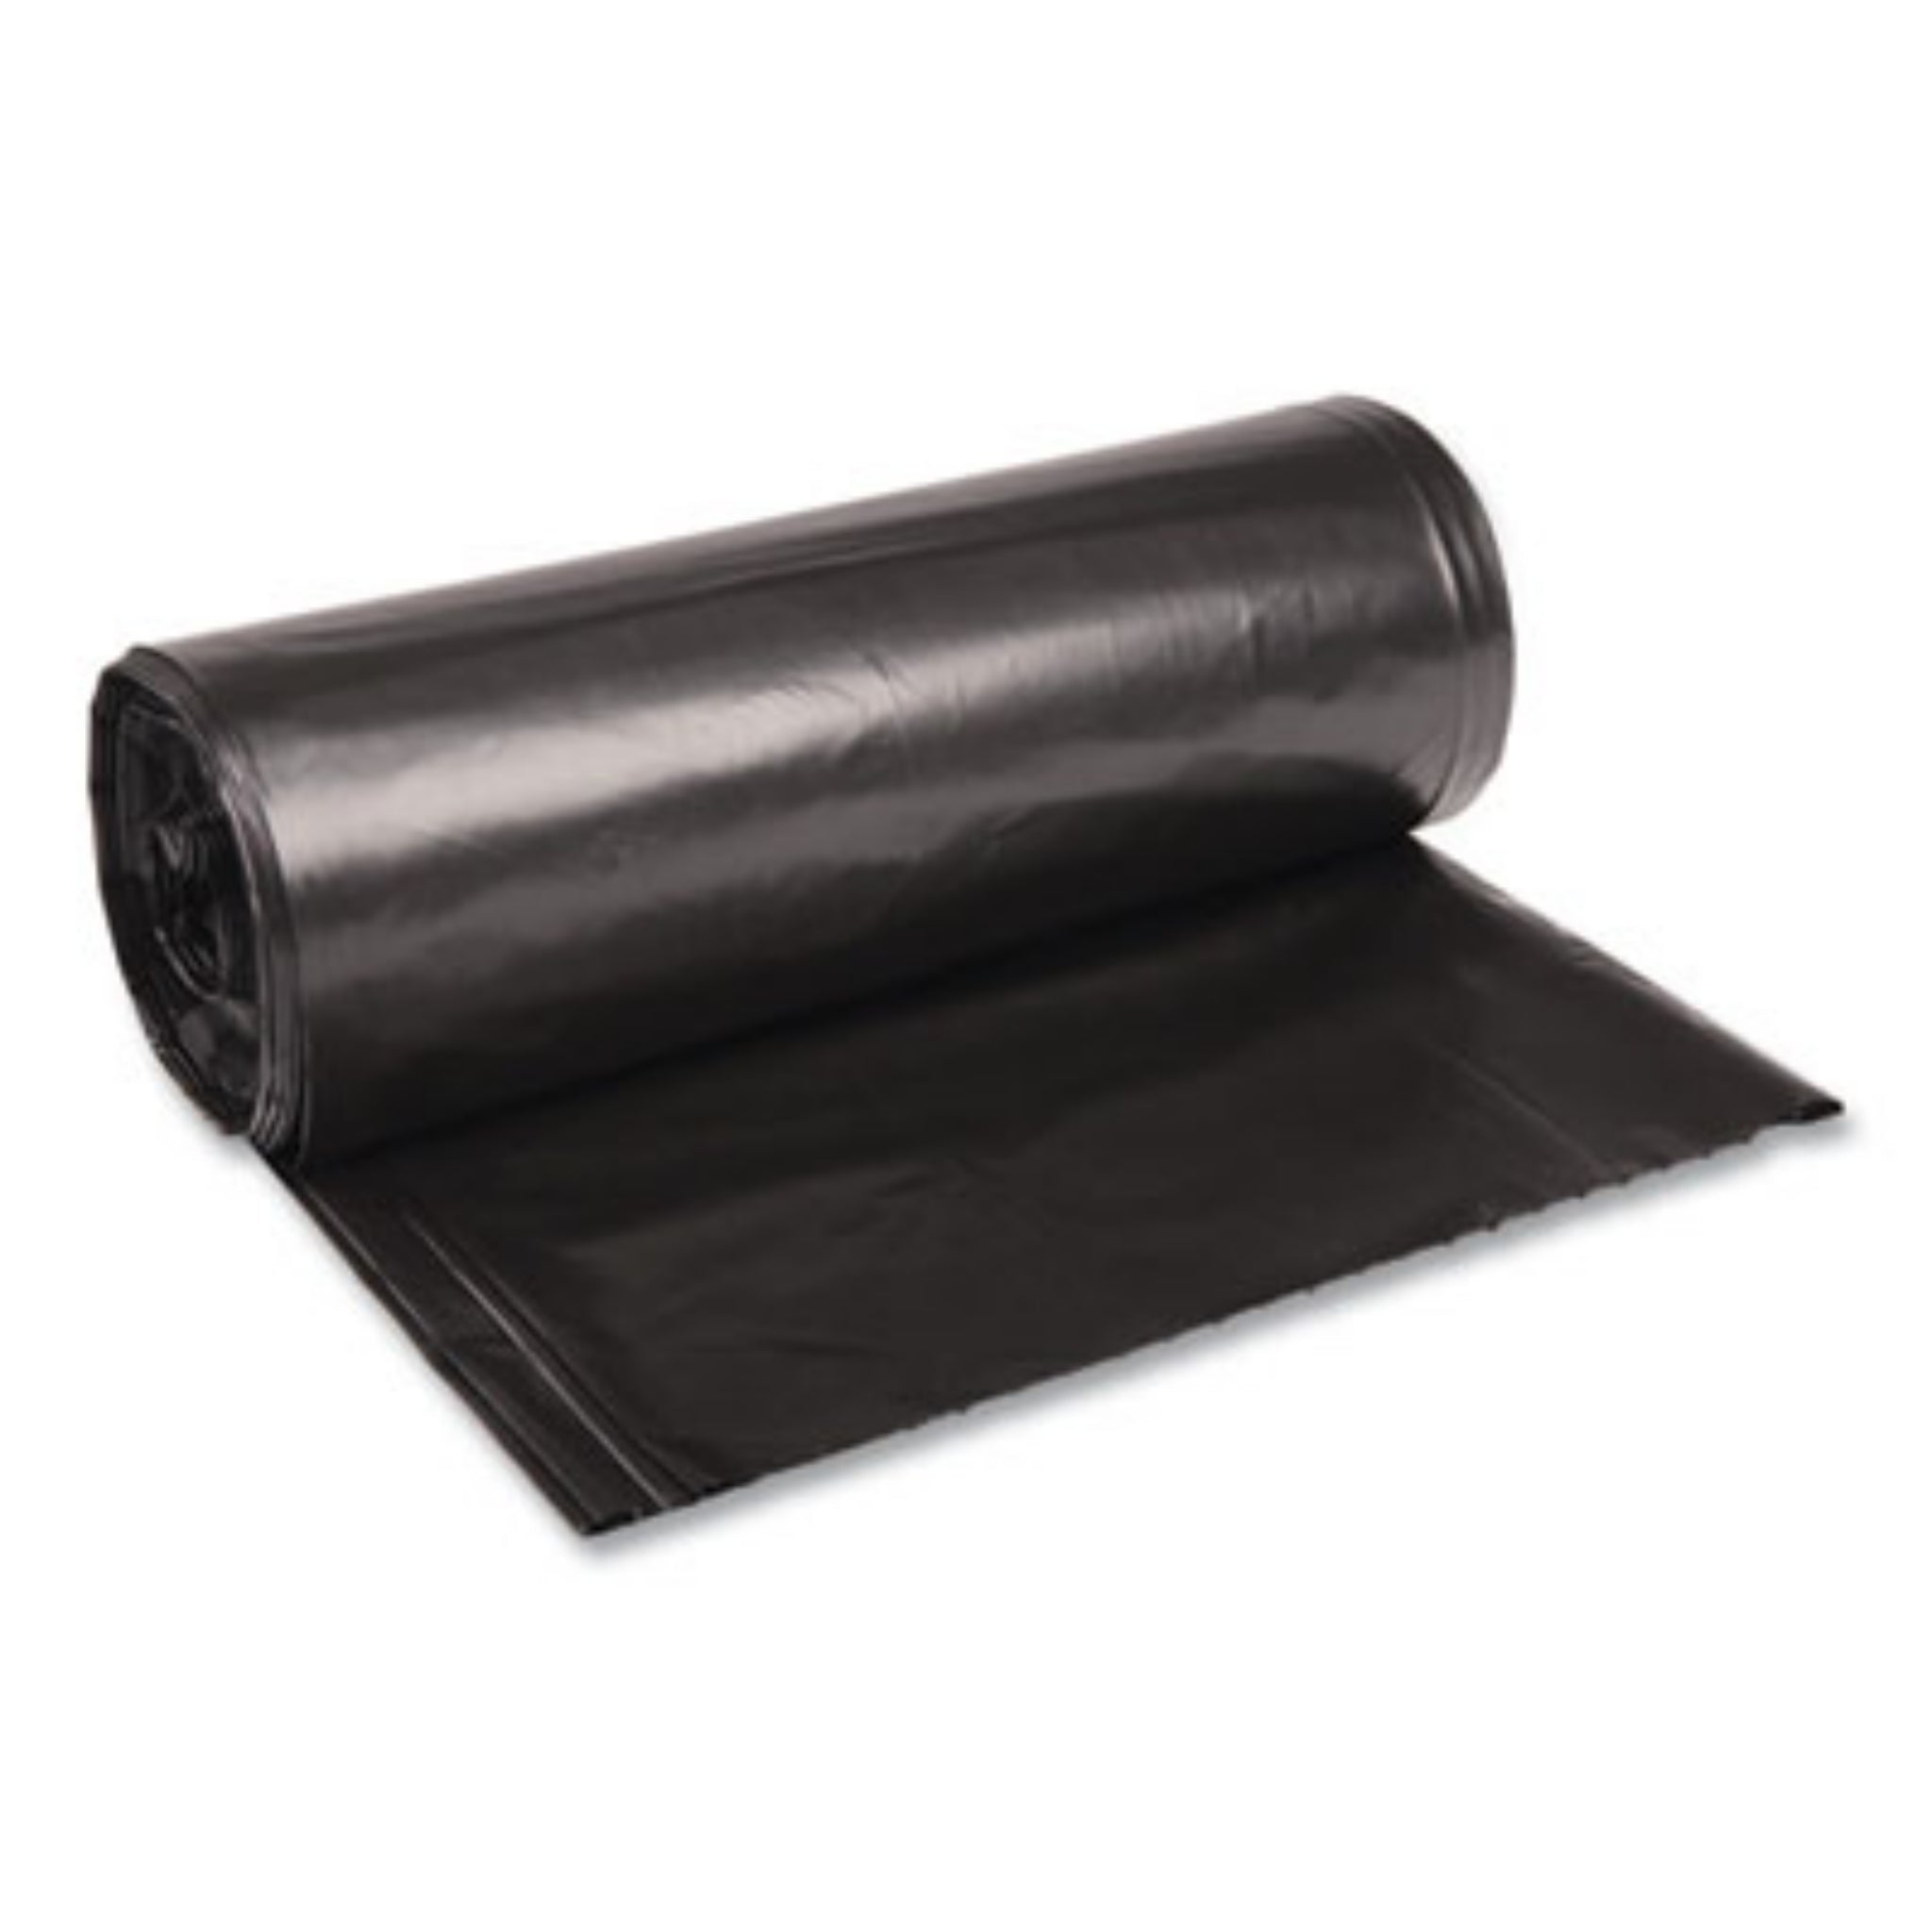 BOARDWALK BWK523 Recycled Low-Density Polyethylene Can Liners, 60 gal, 1.6 mil, 38" x 58", Black, Carton of 10 Rolls